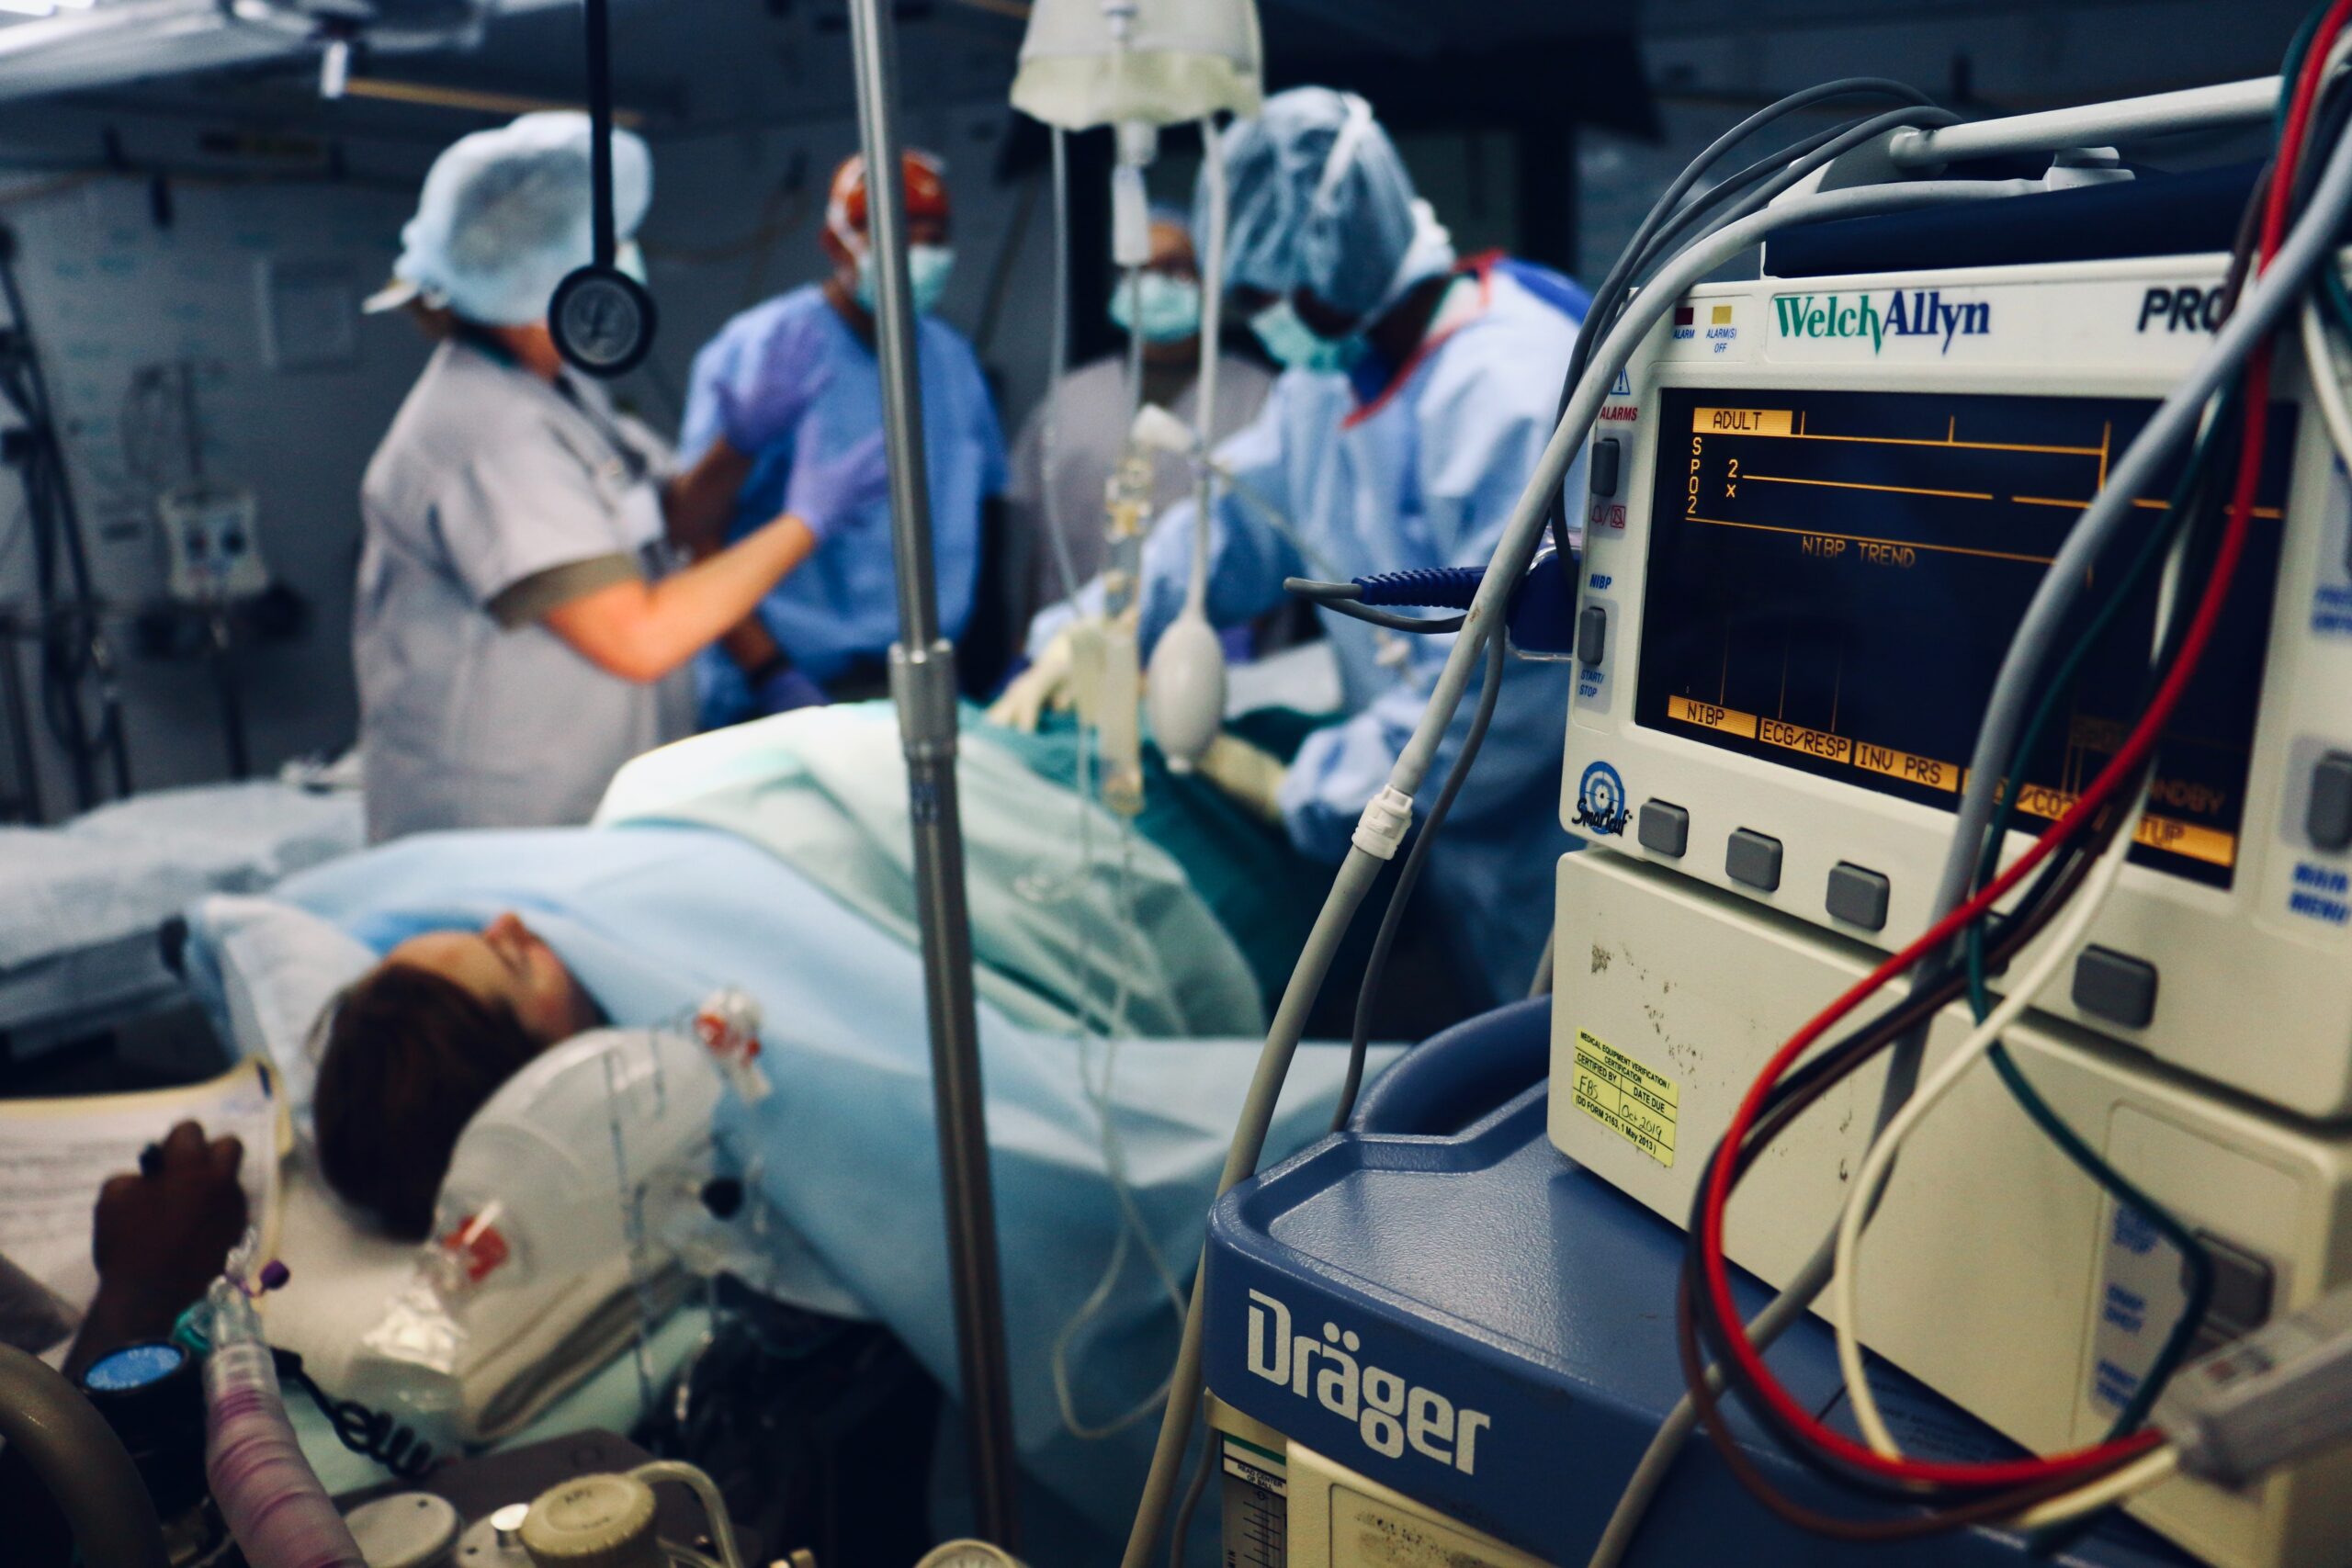 Apollo Hospital Navi Mumbai saves lives, one transplant at a time – celebrates 500+ Solid Organ Transplants milestone